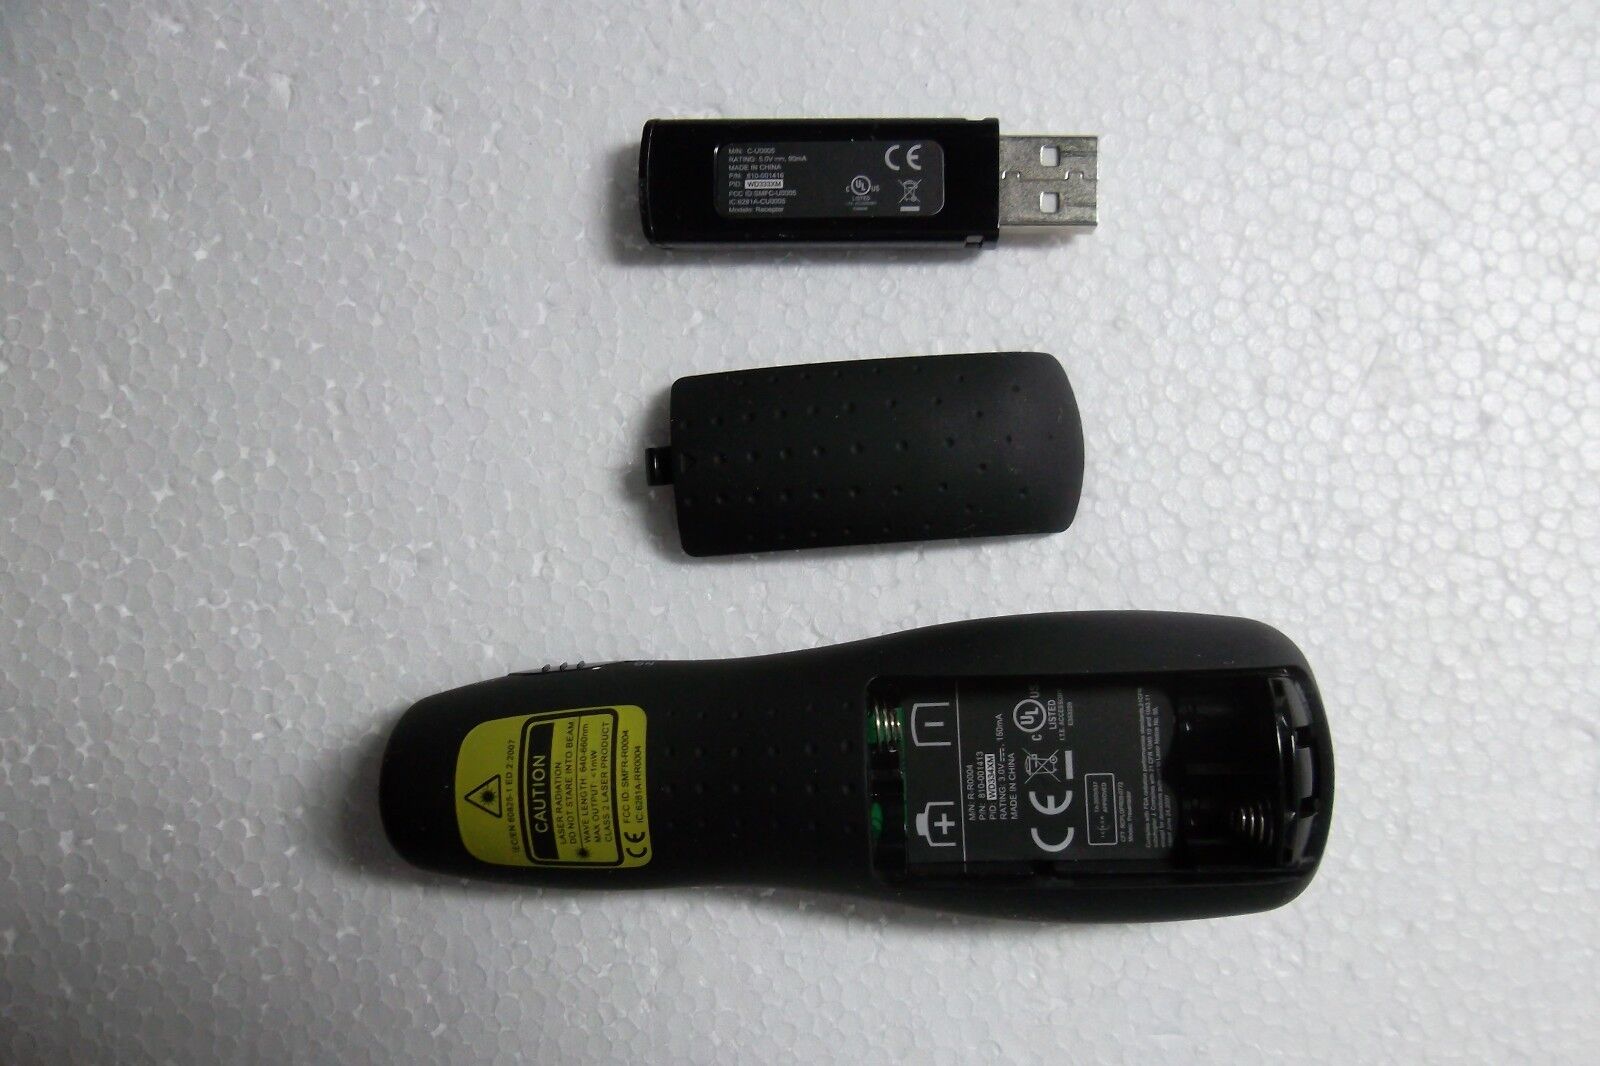 Logitech R400 Wireless Presenter 2.4GHz receptor USB 810-001413 | eBay